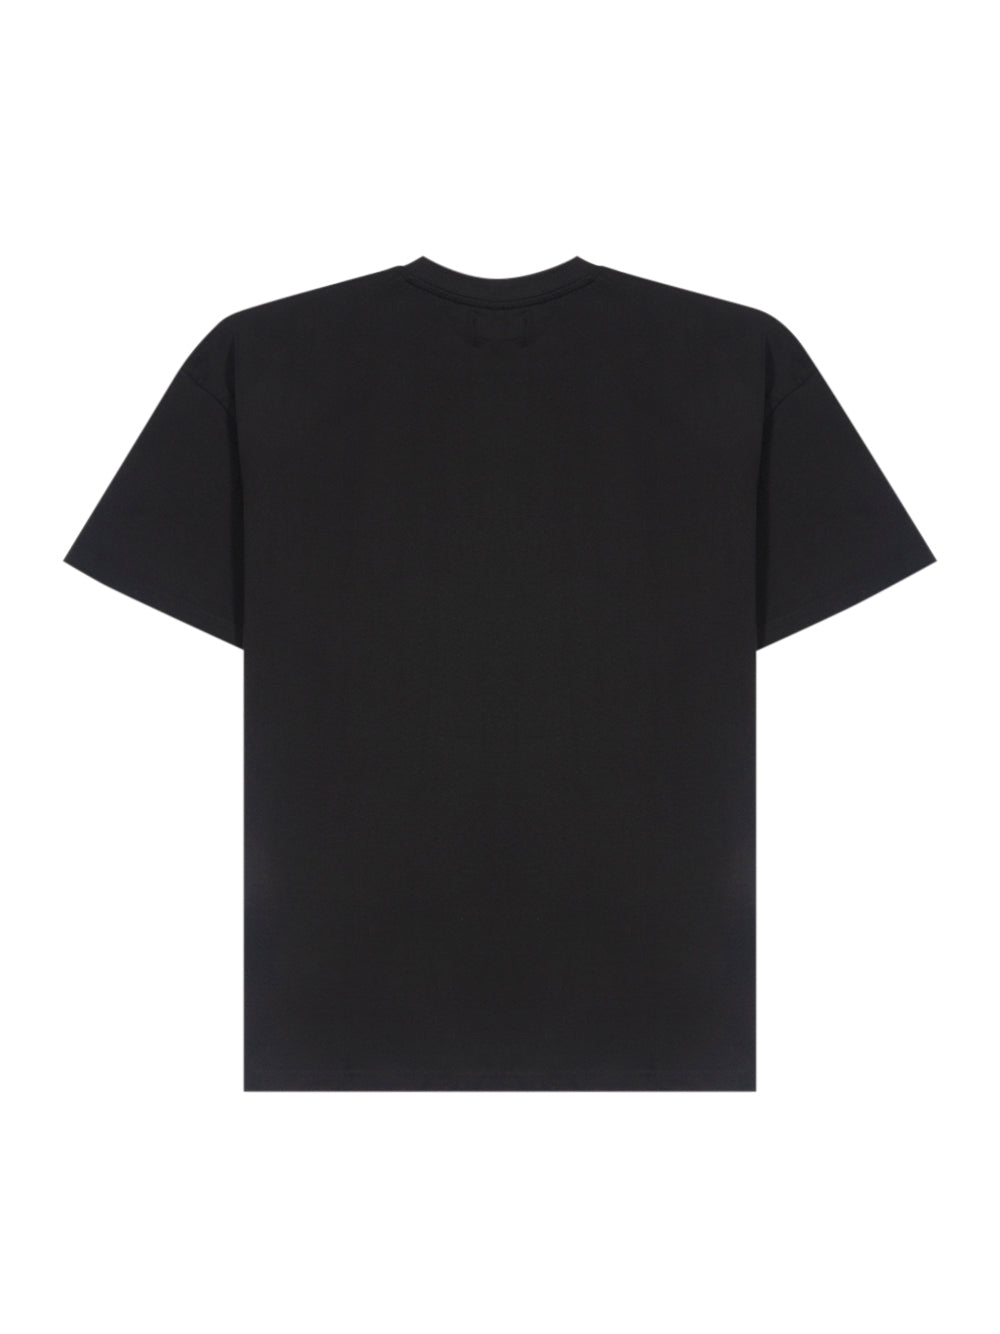 T-Shirt Astro Boy Punch (Black)